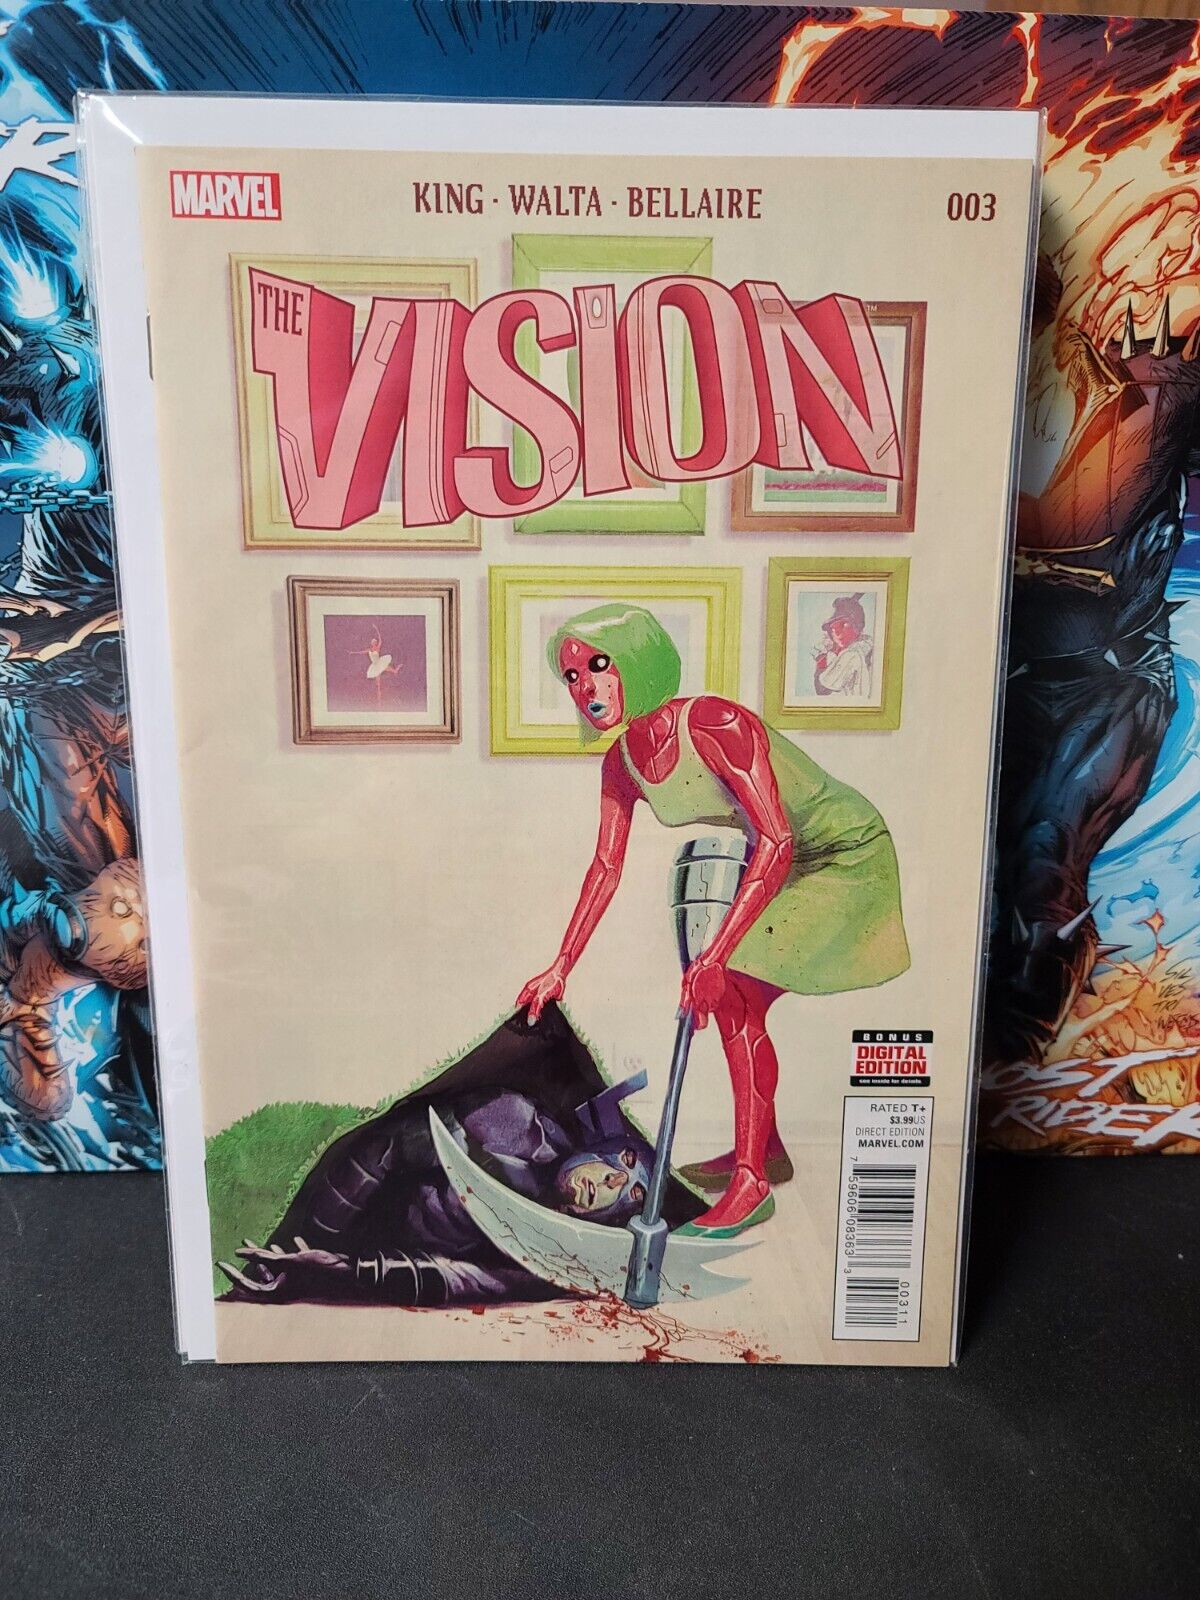 The Vision #3 - Marvel Comics - 2015 - Tom King